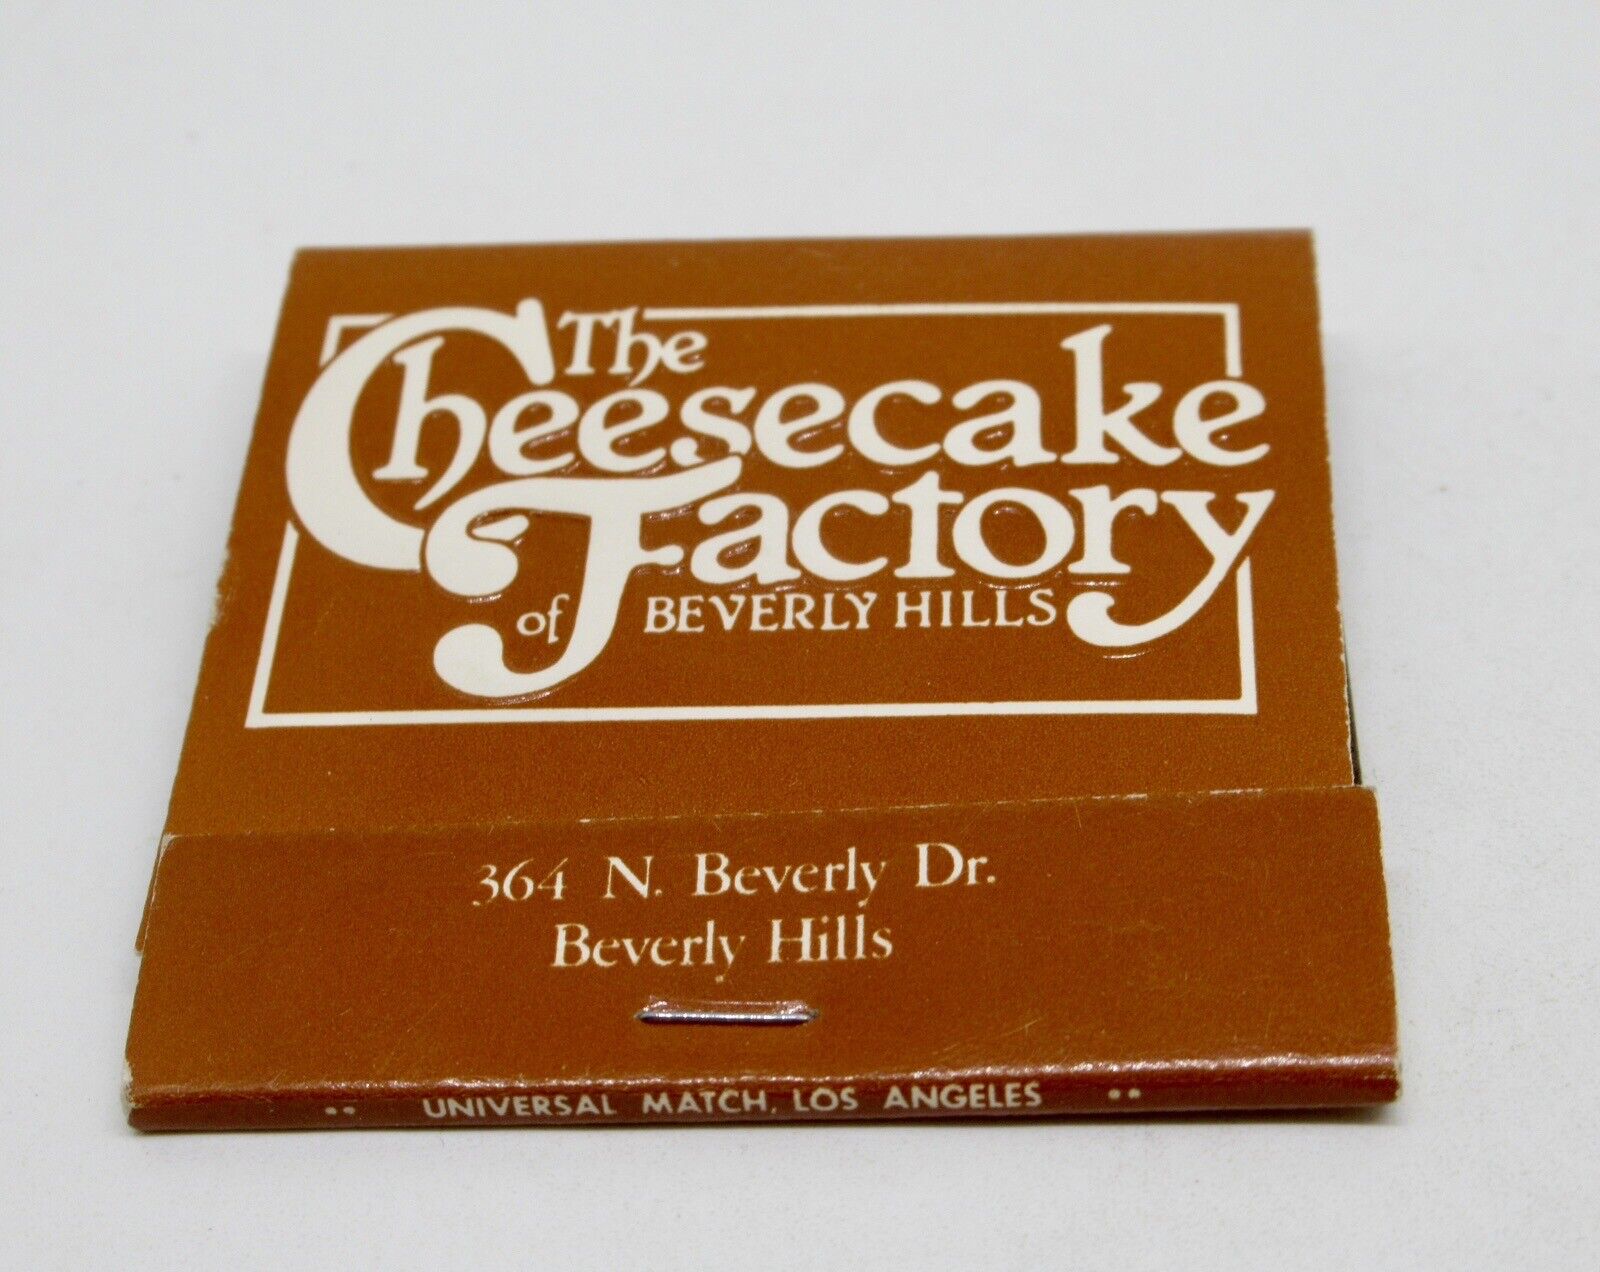 The Cheesecake Factory Restaurant of Beverly Hills California FULL Matchbook